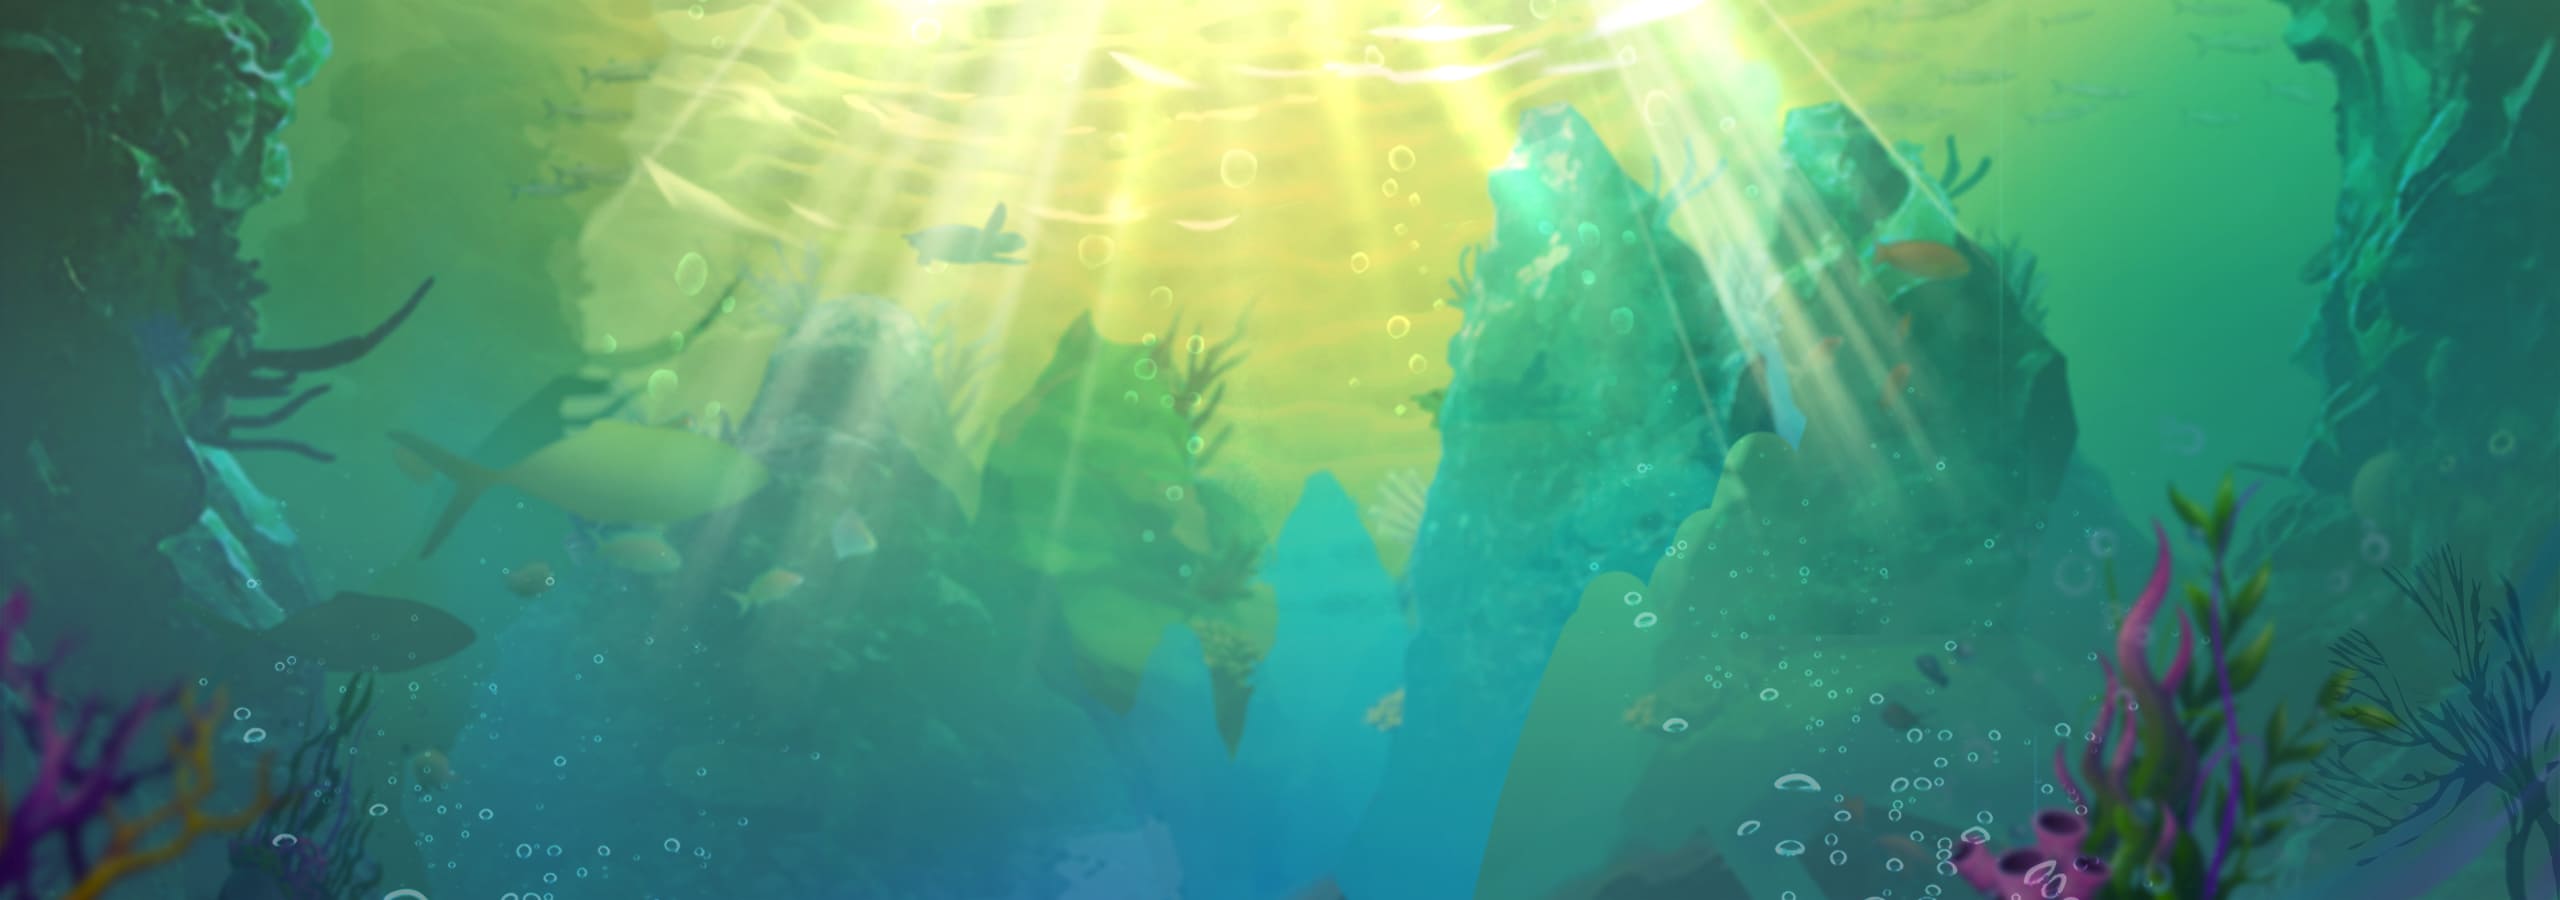 Mermaid's Treasure's background